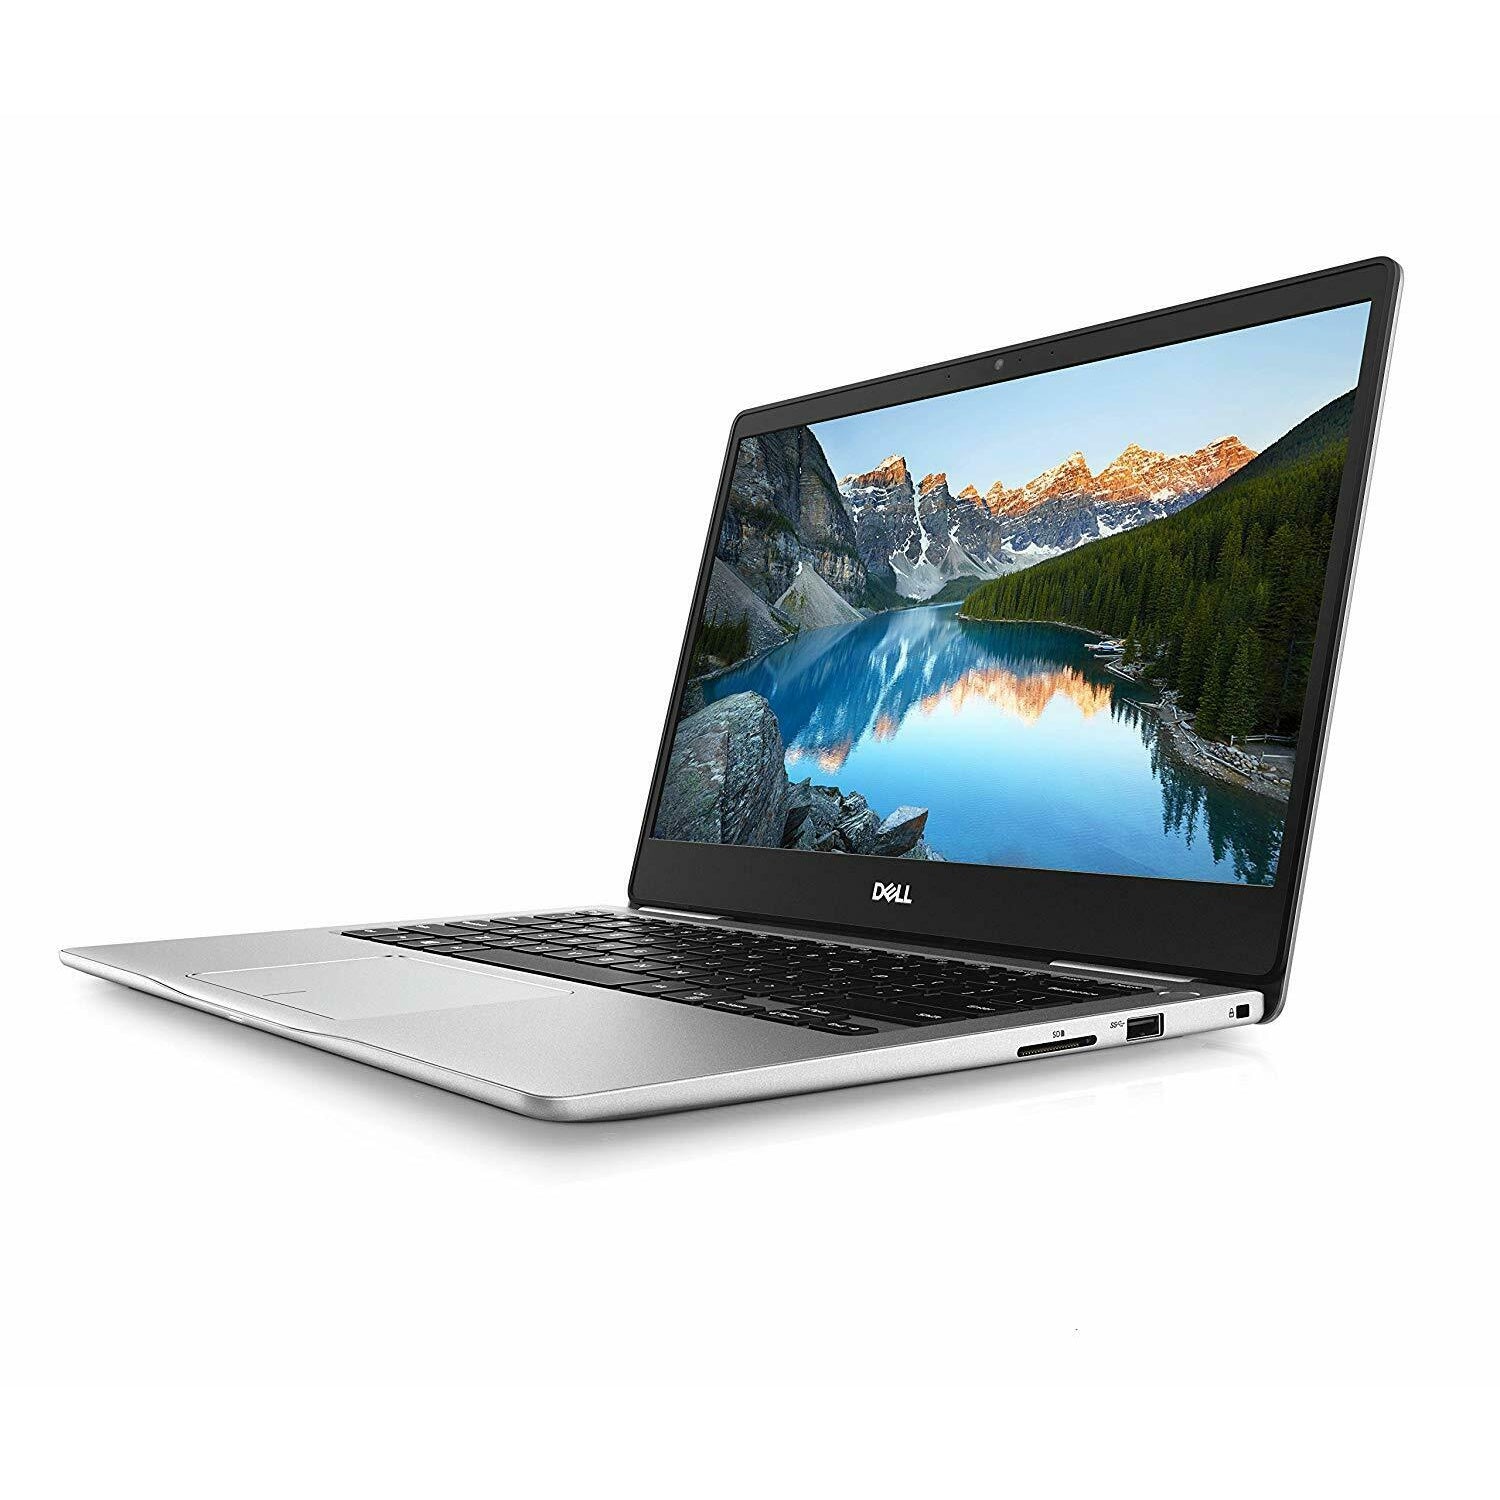 Dell Inspiron 13 7380 Laptop, Intel Core i7, 8GB RAM, 256GB SSD, 13.3” Full HD, Silver